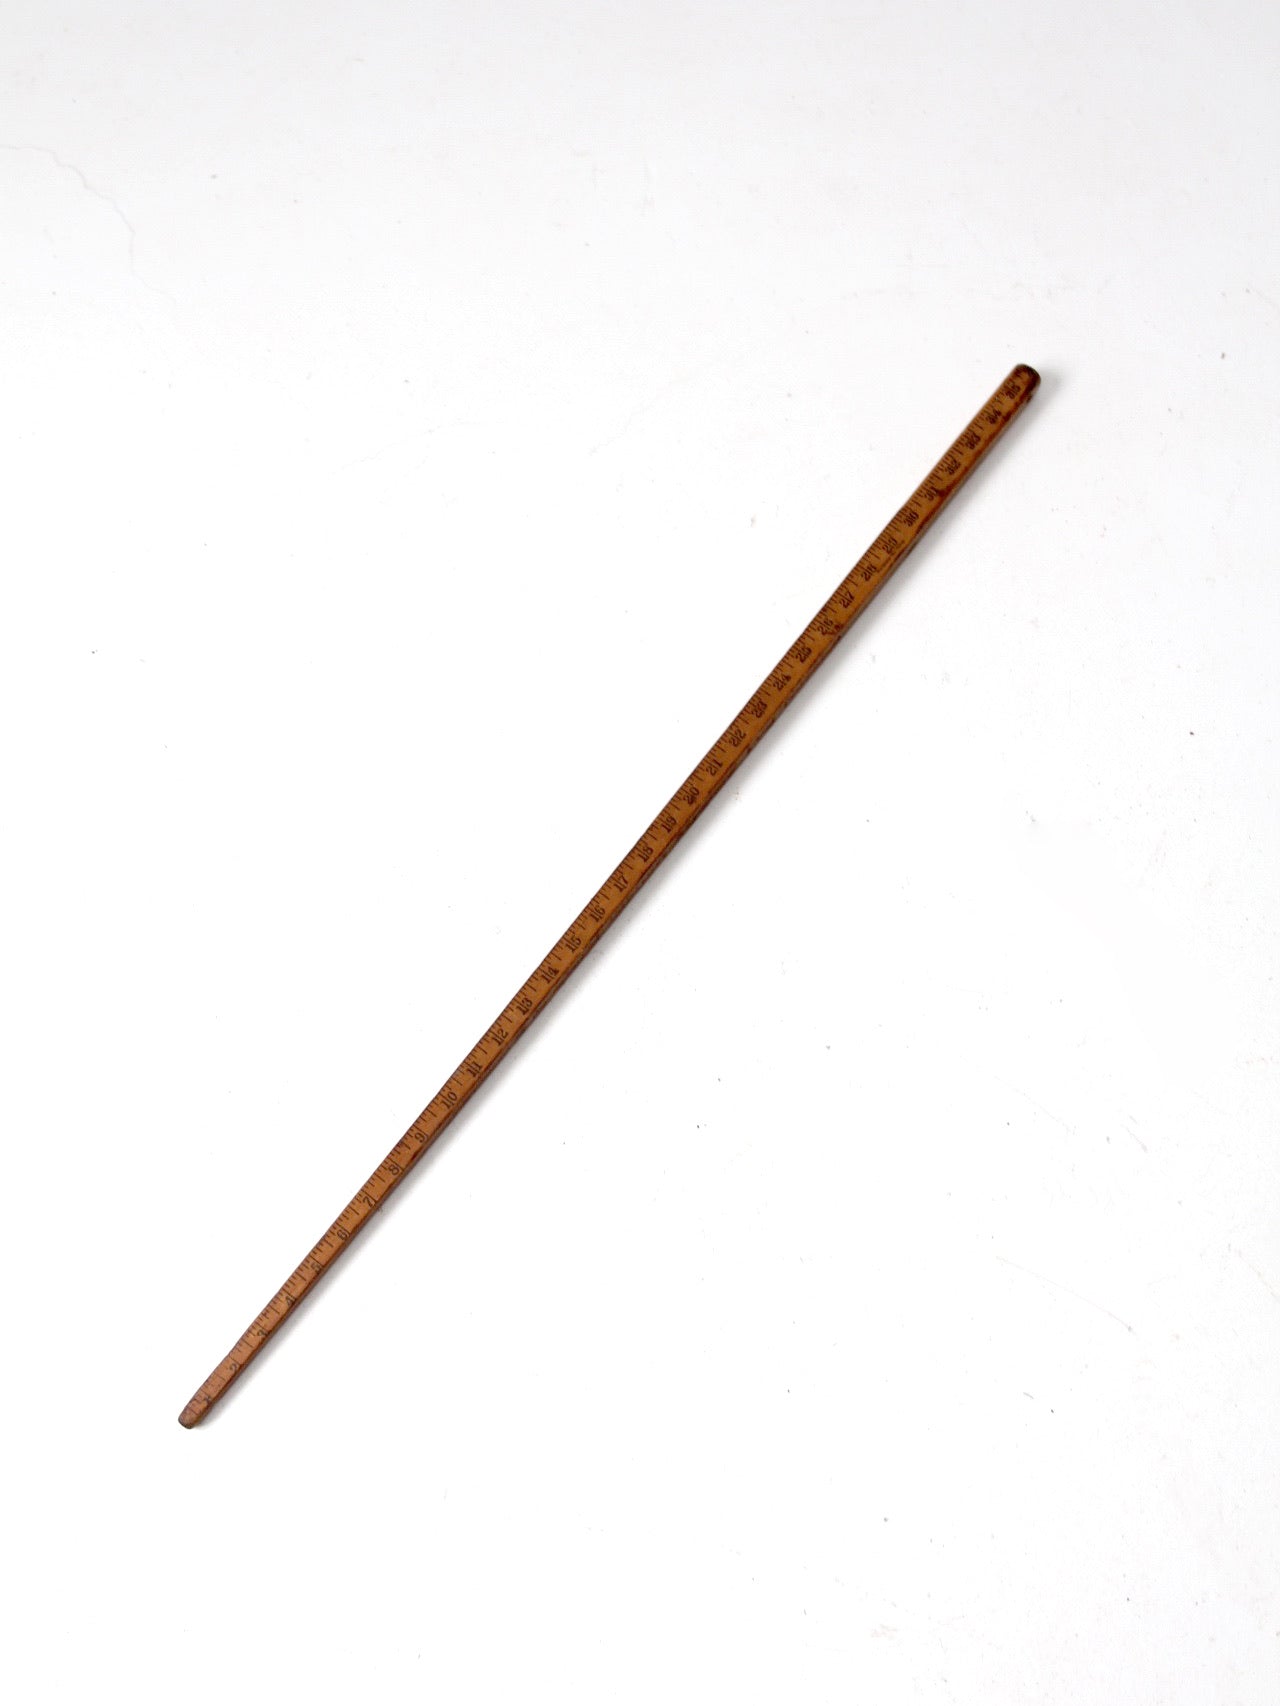 1A10.35 - Meter Stick - Yard Stick